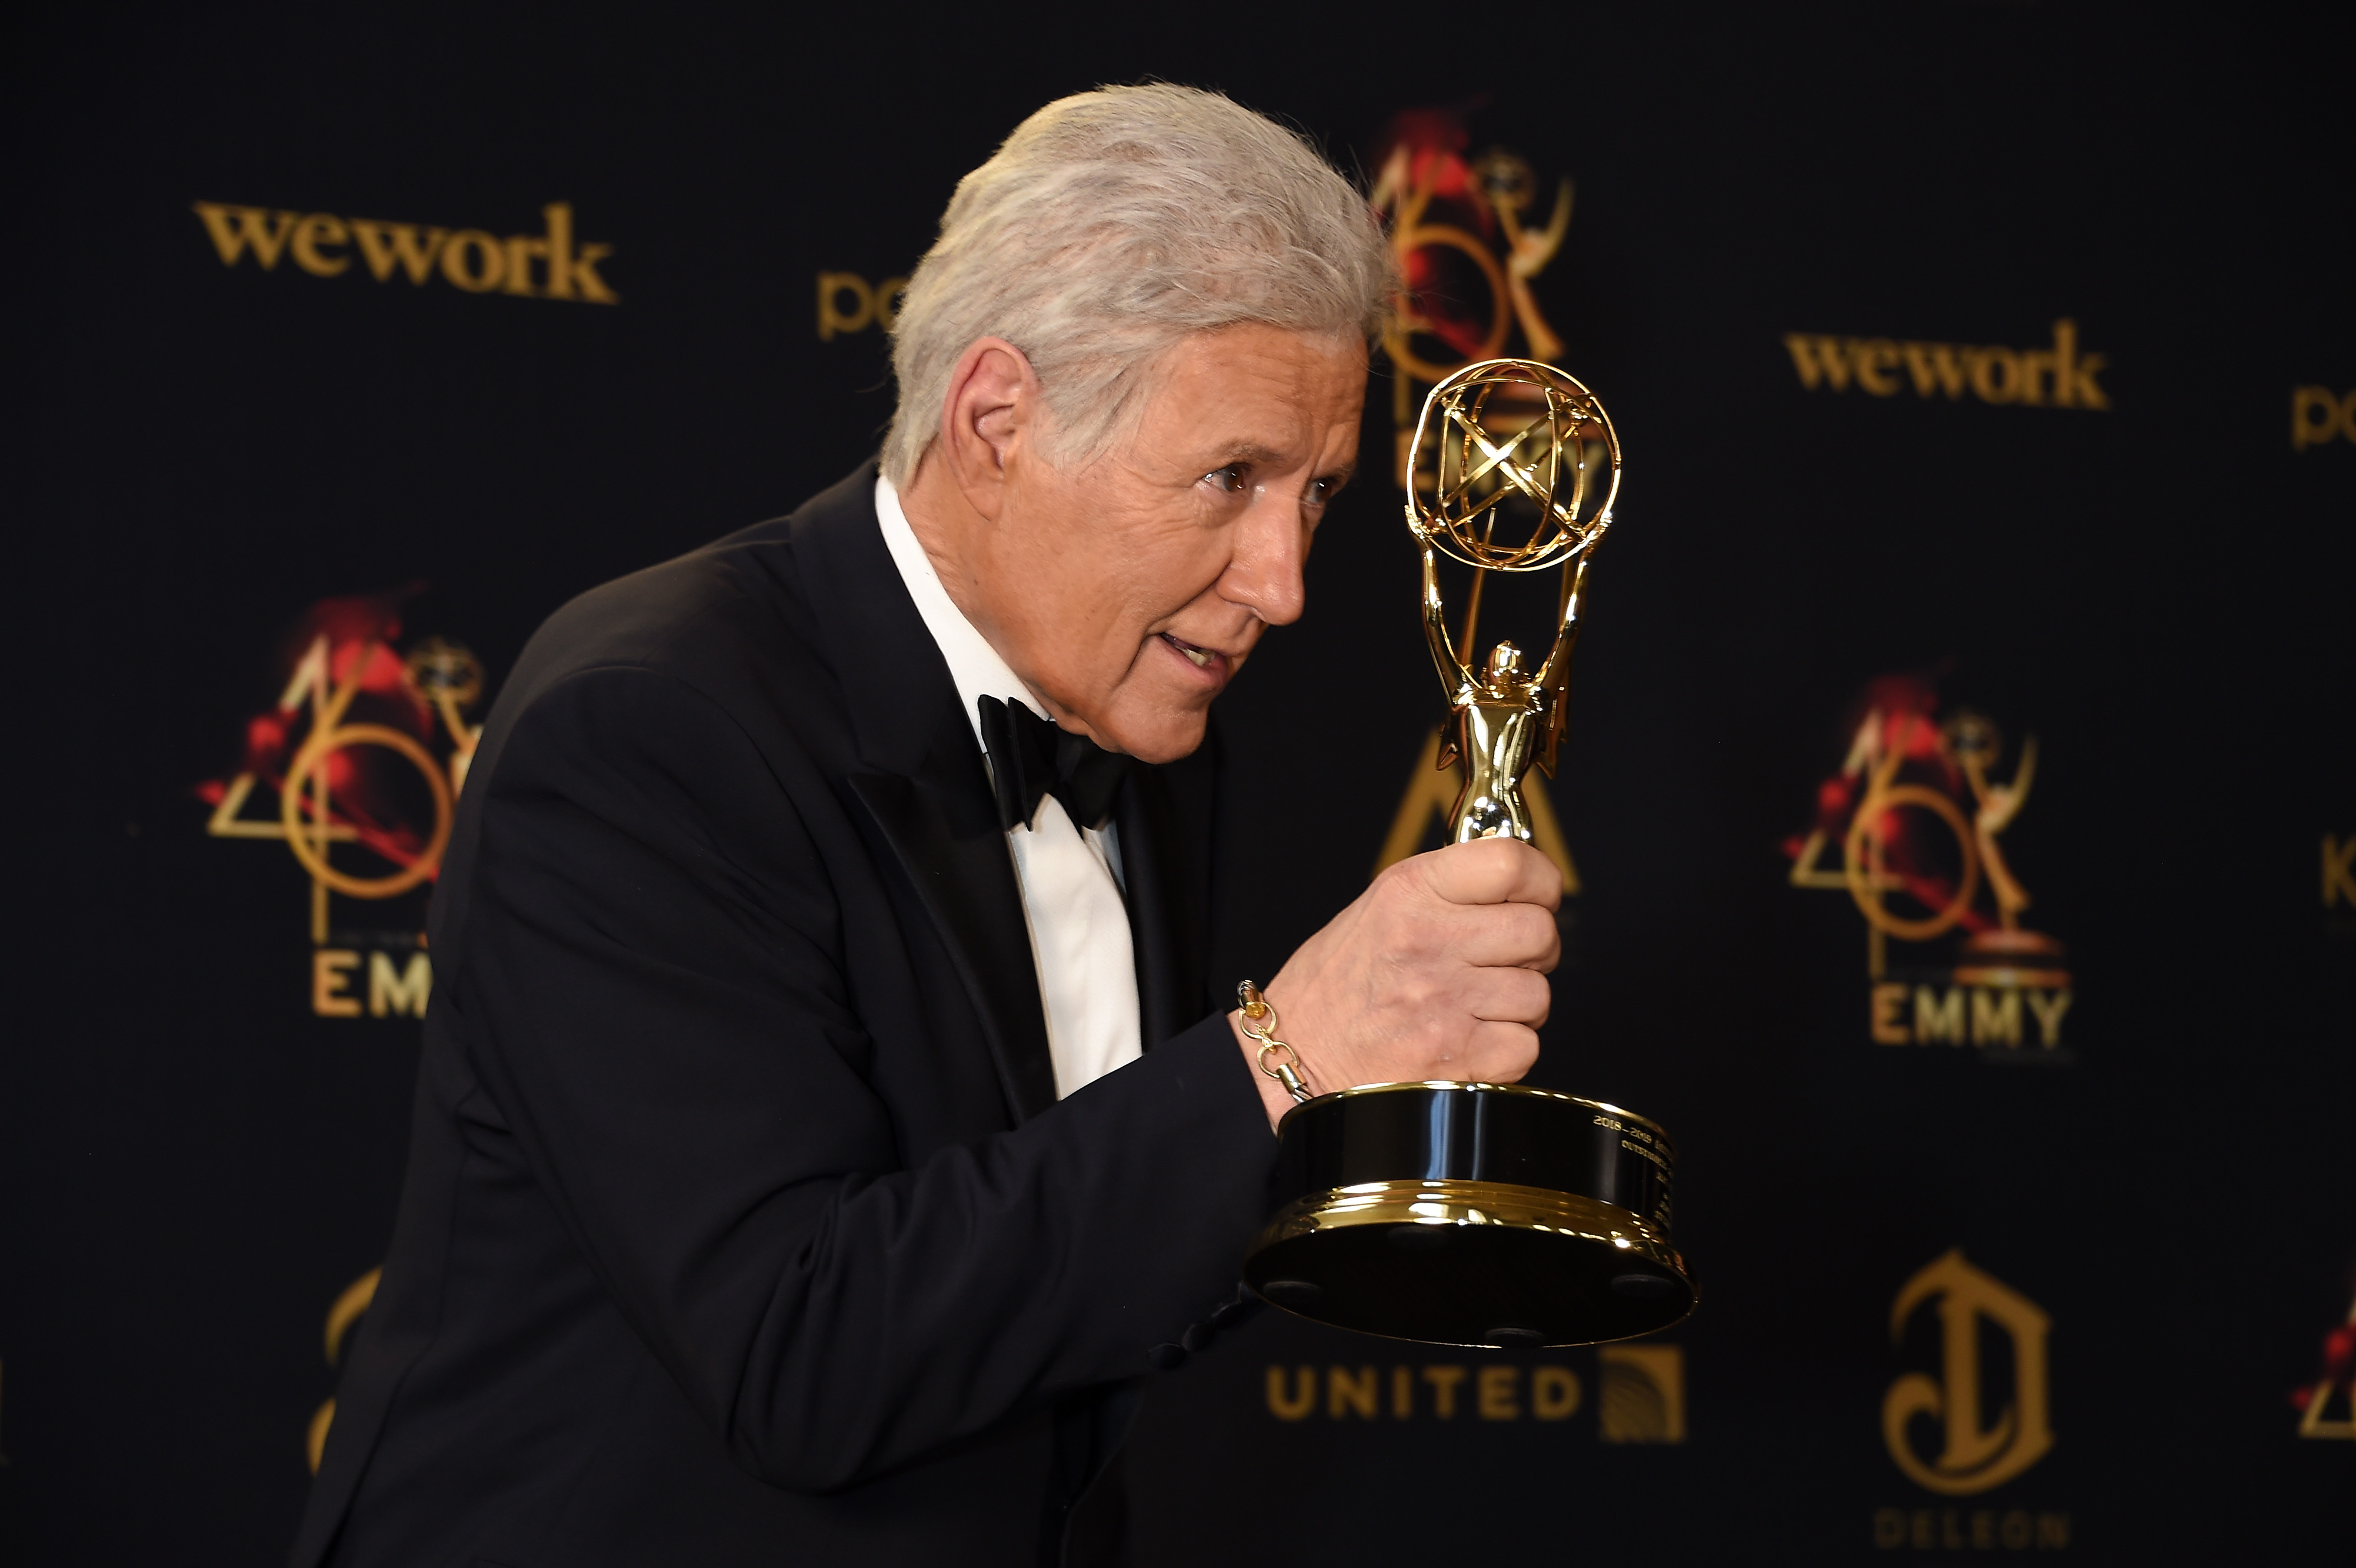 Alex Trebek accepting a Daytime Emmy award at the 2019 ceremony